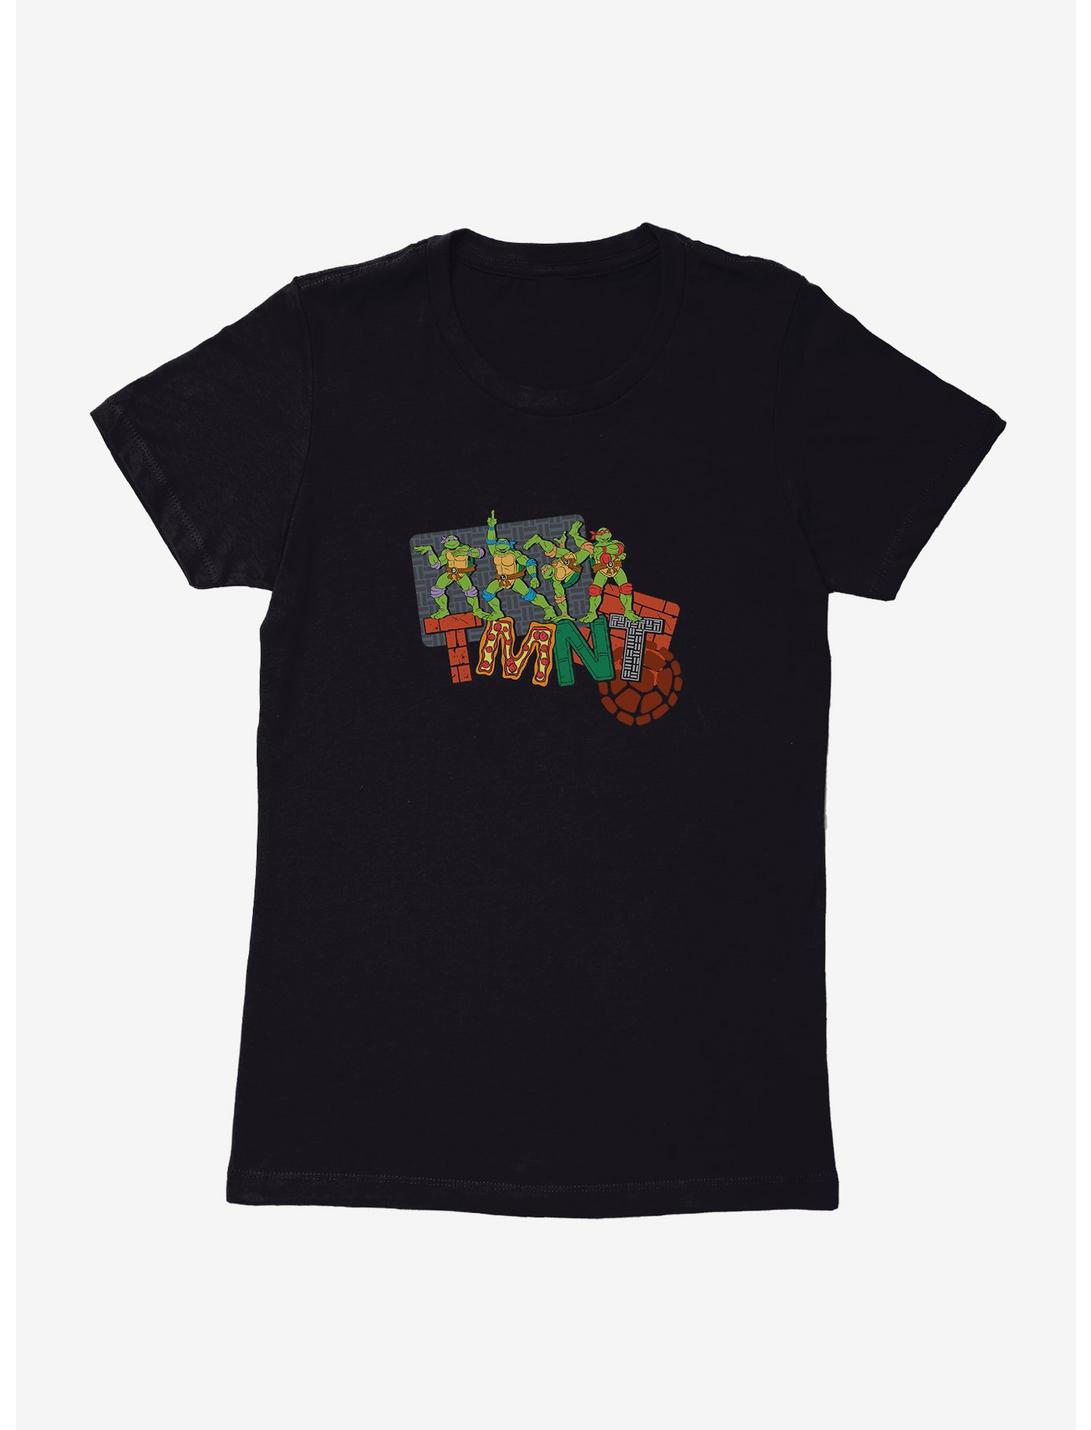 Teenage Mutant Ninja Turtles Patterned Logo Letters Womens T-Shirt, BLACK, hi-res